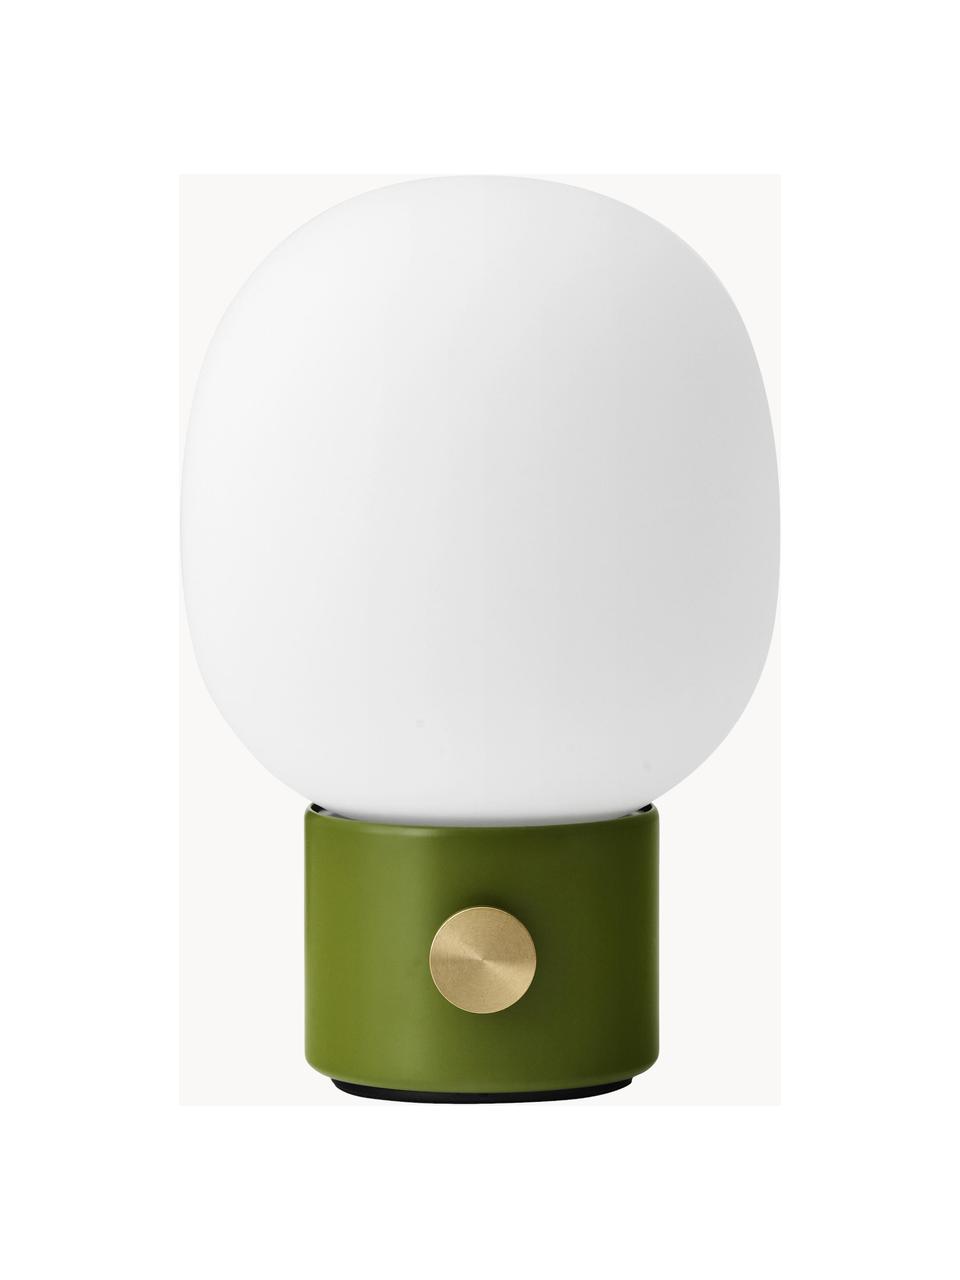 Lampada da tavolo dimmerabile con porta USB  JWDA, Paralume: vetro, Bianco, verde, Ø 15 x Alt. 22 cm